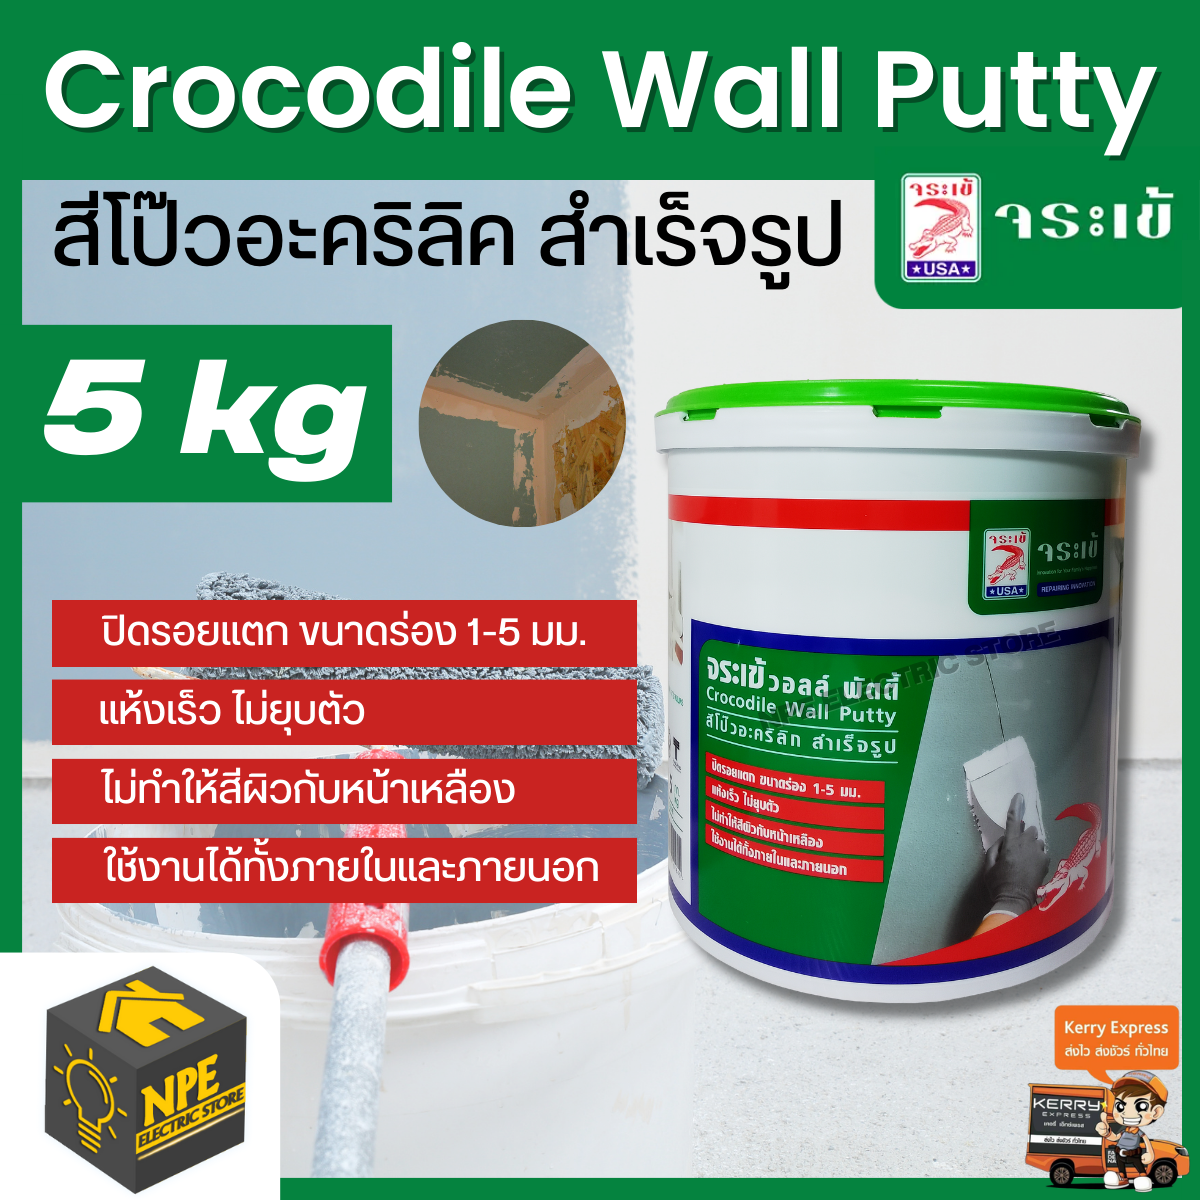 Crocodile Wall Putty